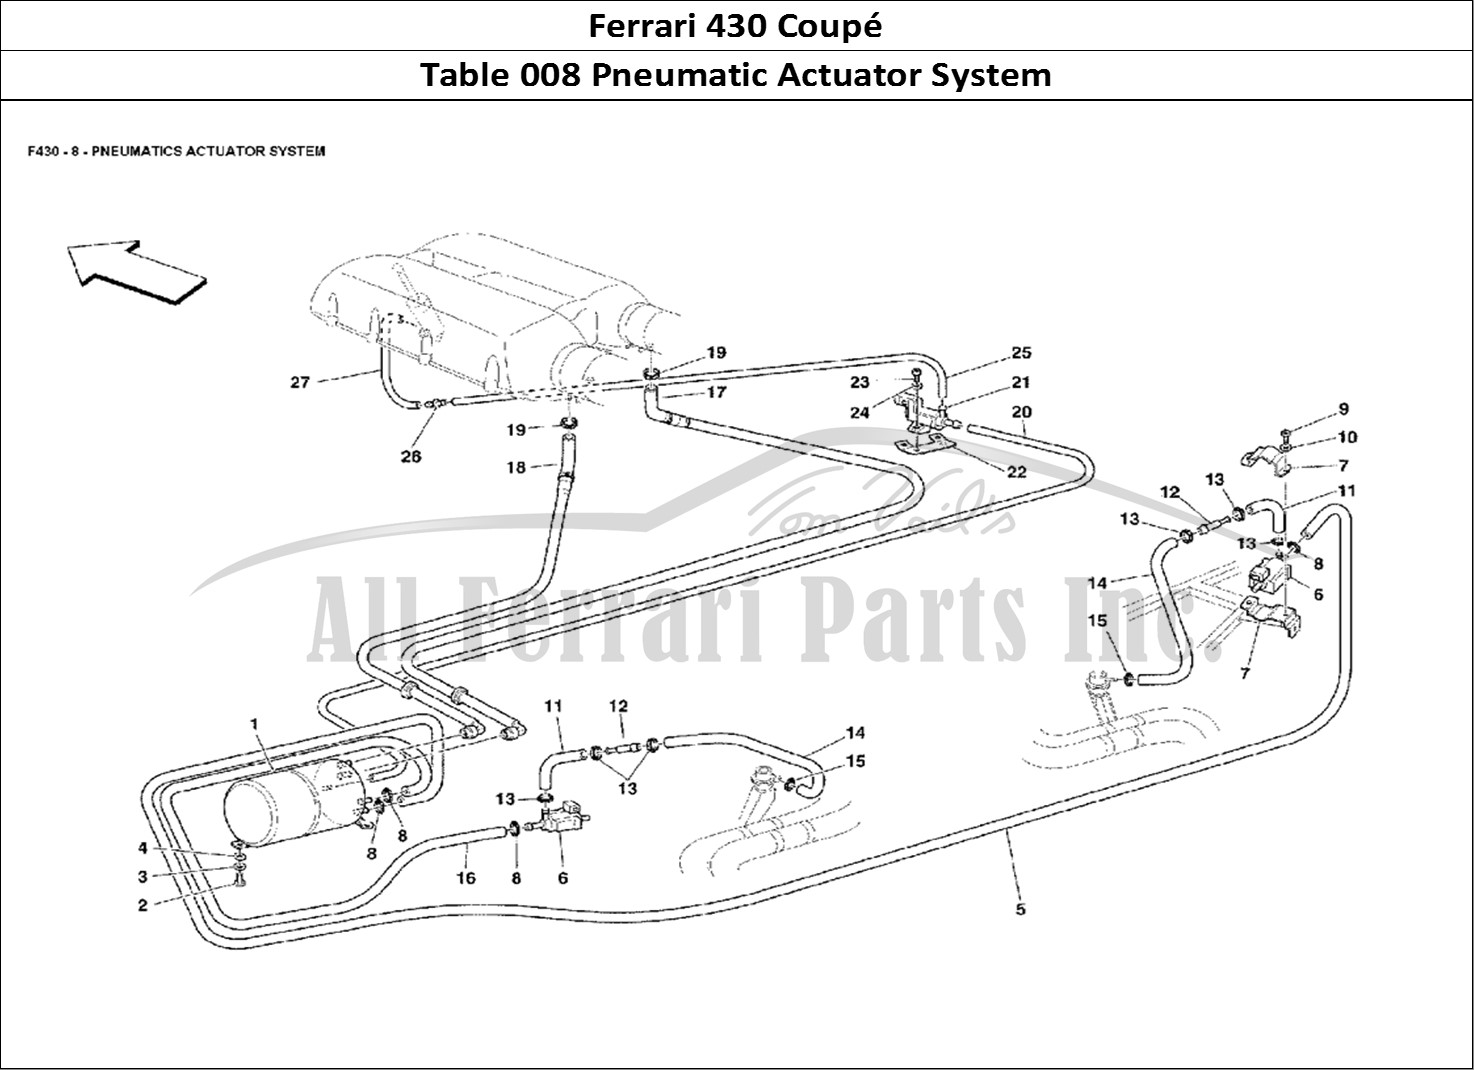 Ferrari Parts Ferrari 430 Coup Page 008 Pneumatics Actuator Syste